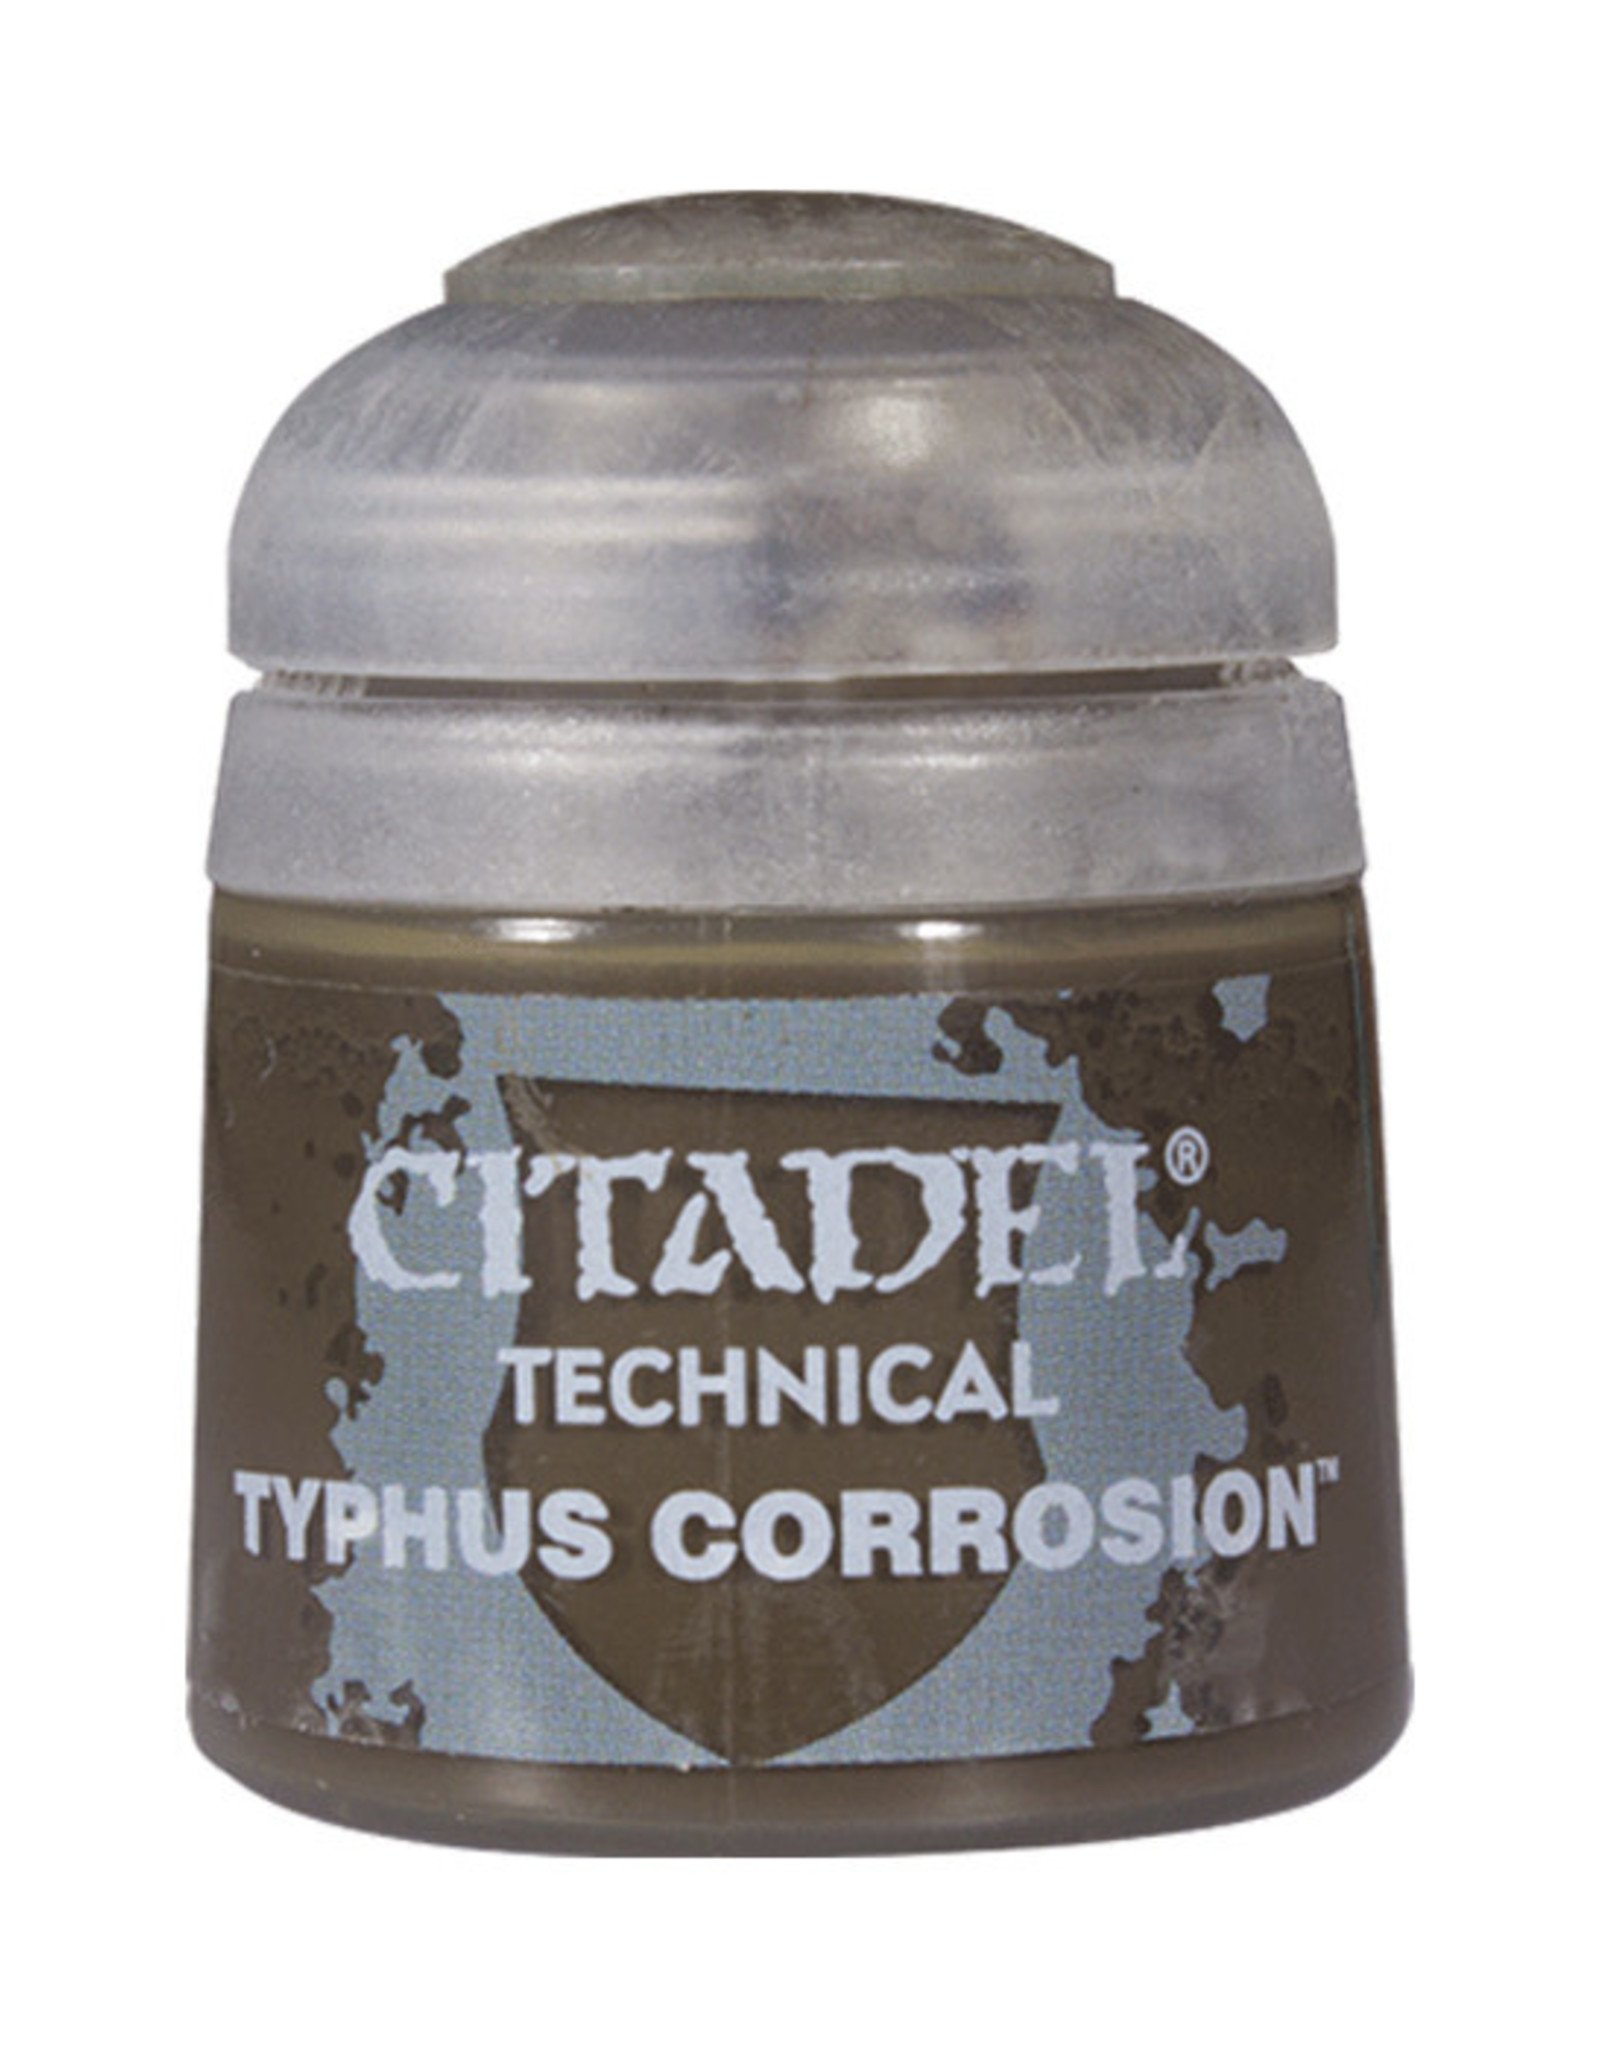 Citadel Citadel Colour: Technical - Typhus Corrosion